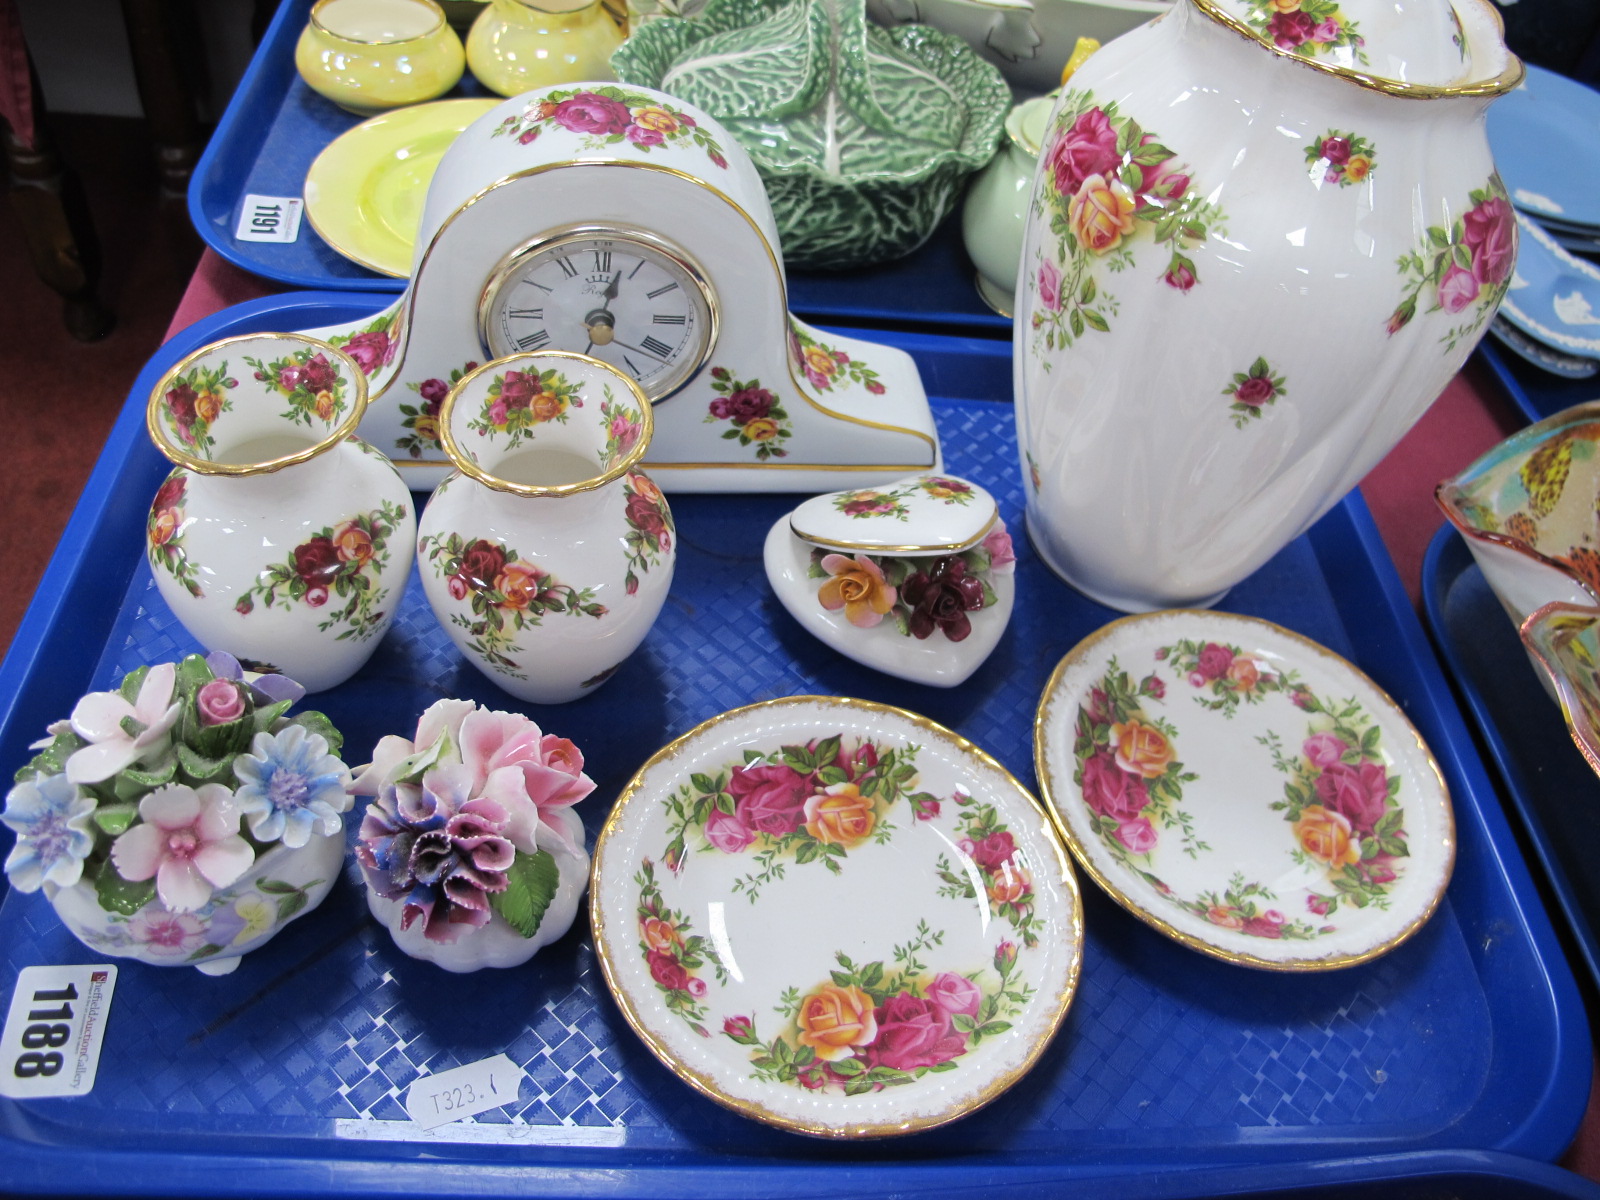 Royal Albert 'Old Country Roses' Lidded Jar, pair vases, pin trays, floral cased clock similar,